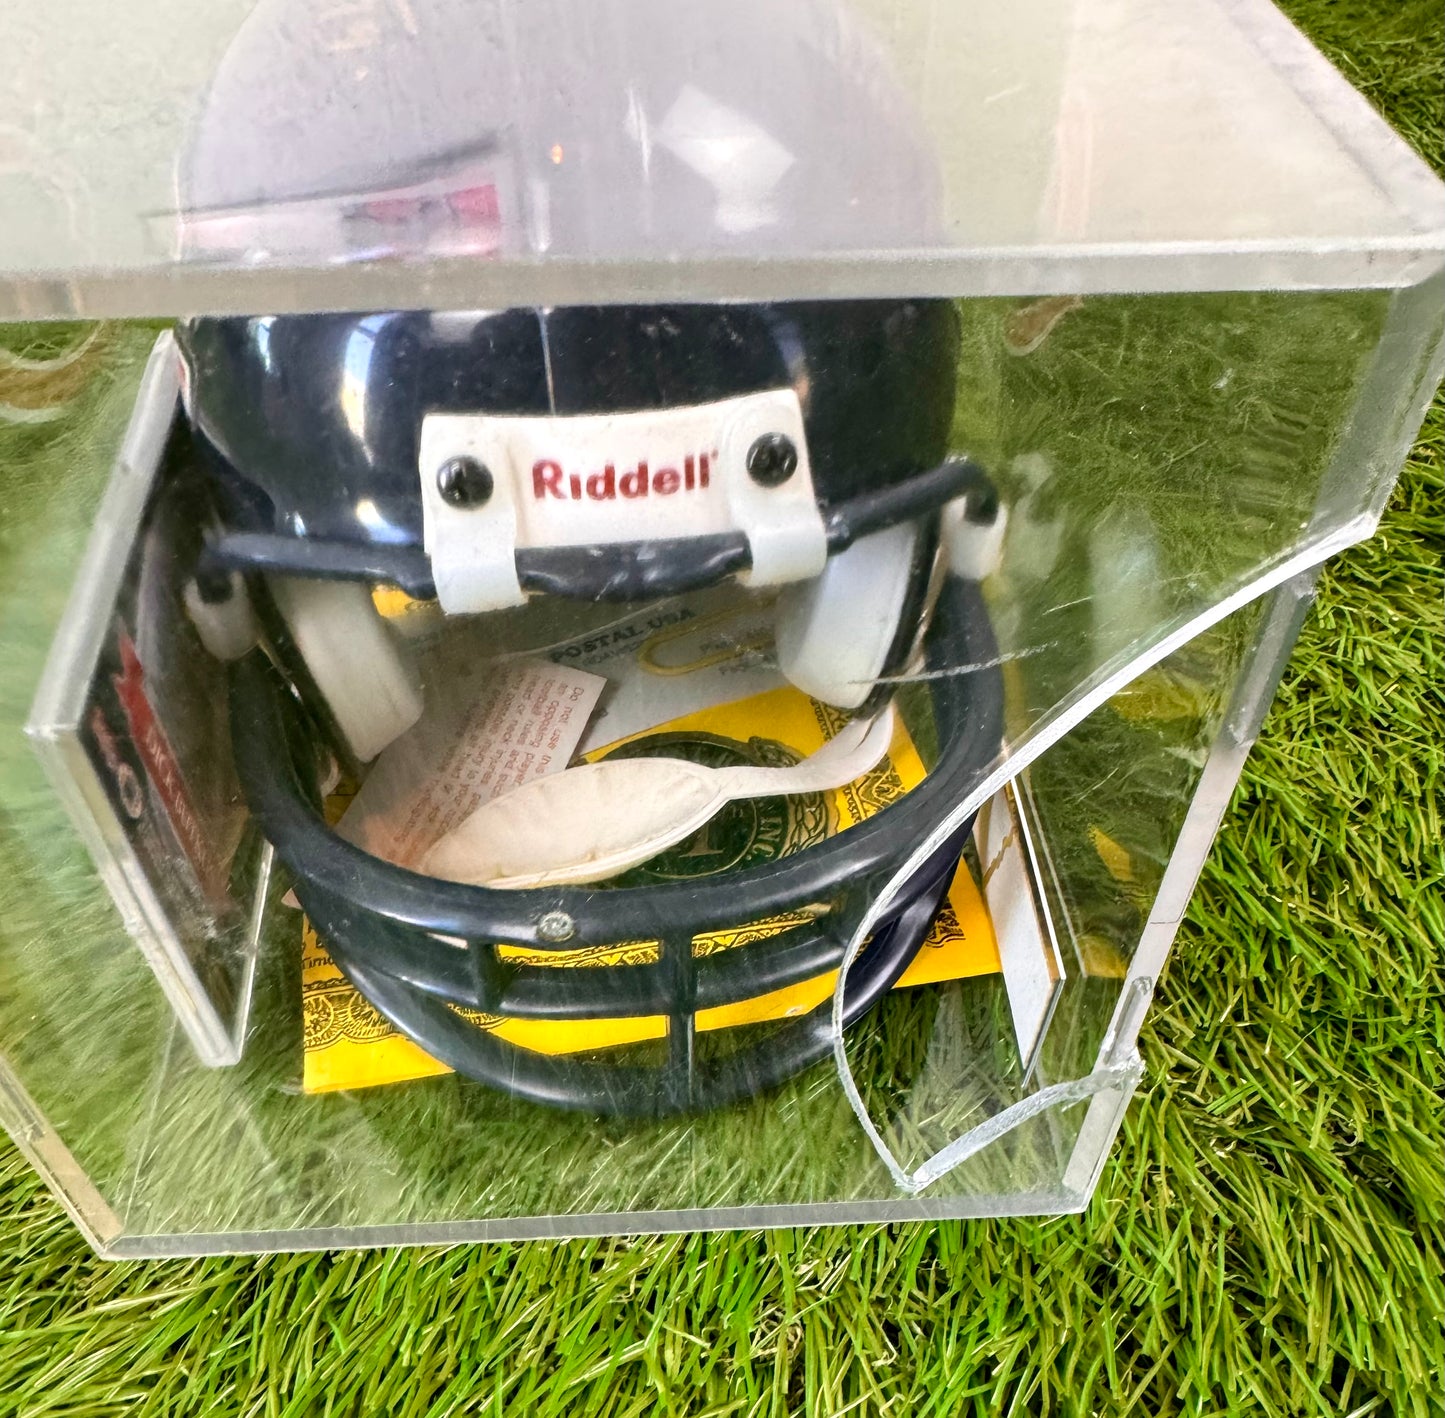 Chicago Bears Dick Butkus Signed Autographed NFL Mini Football Helmet and Card